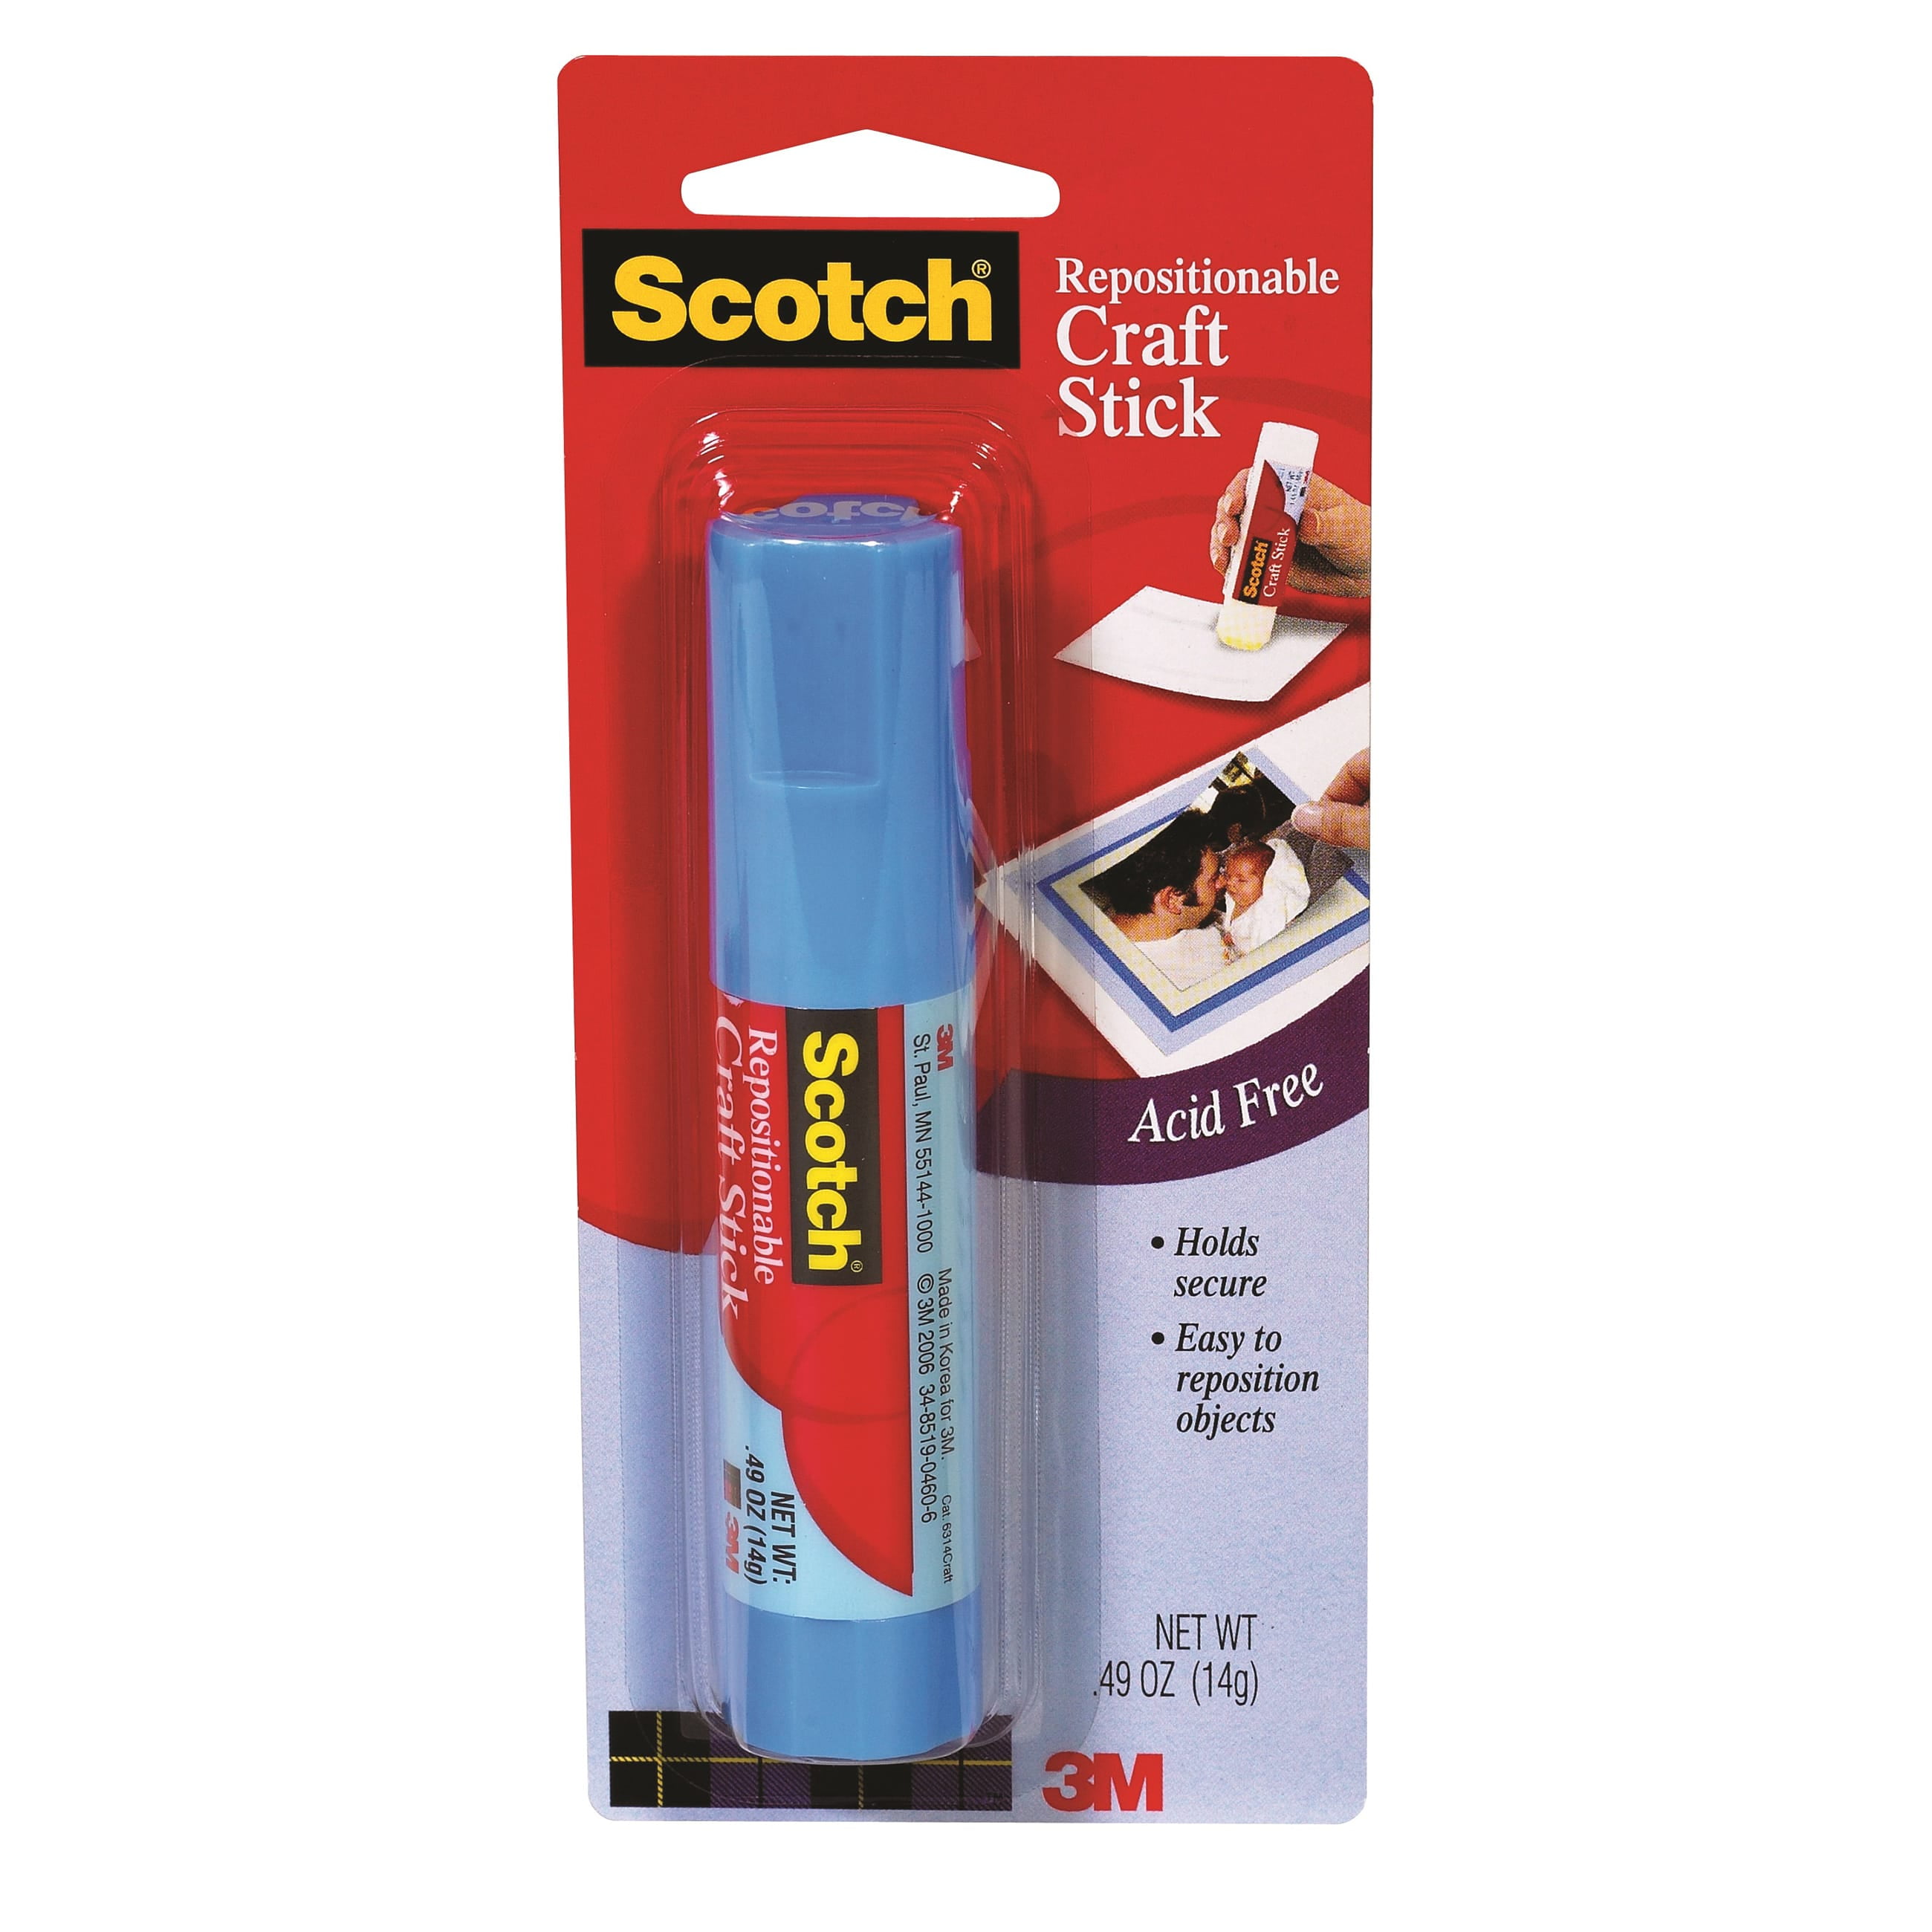 Scotch Craft Glue Sticks for sale